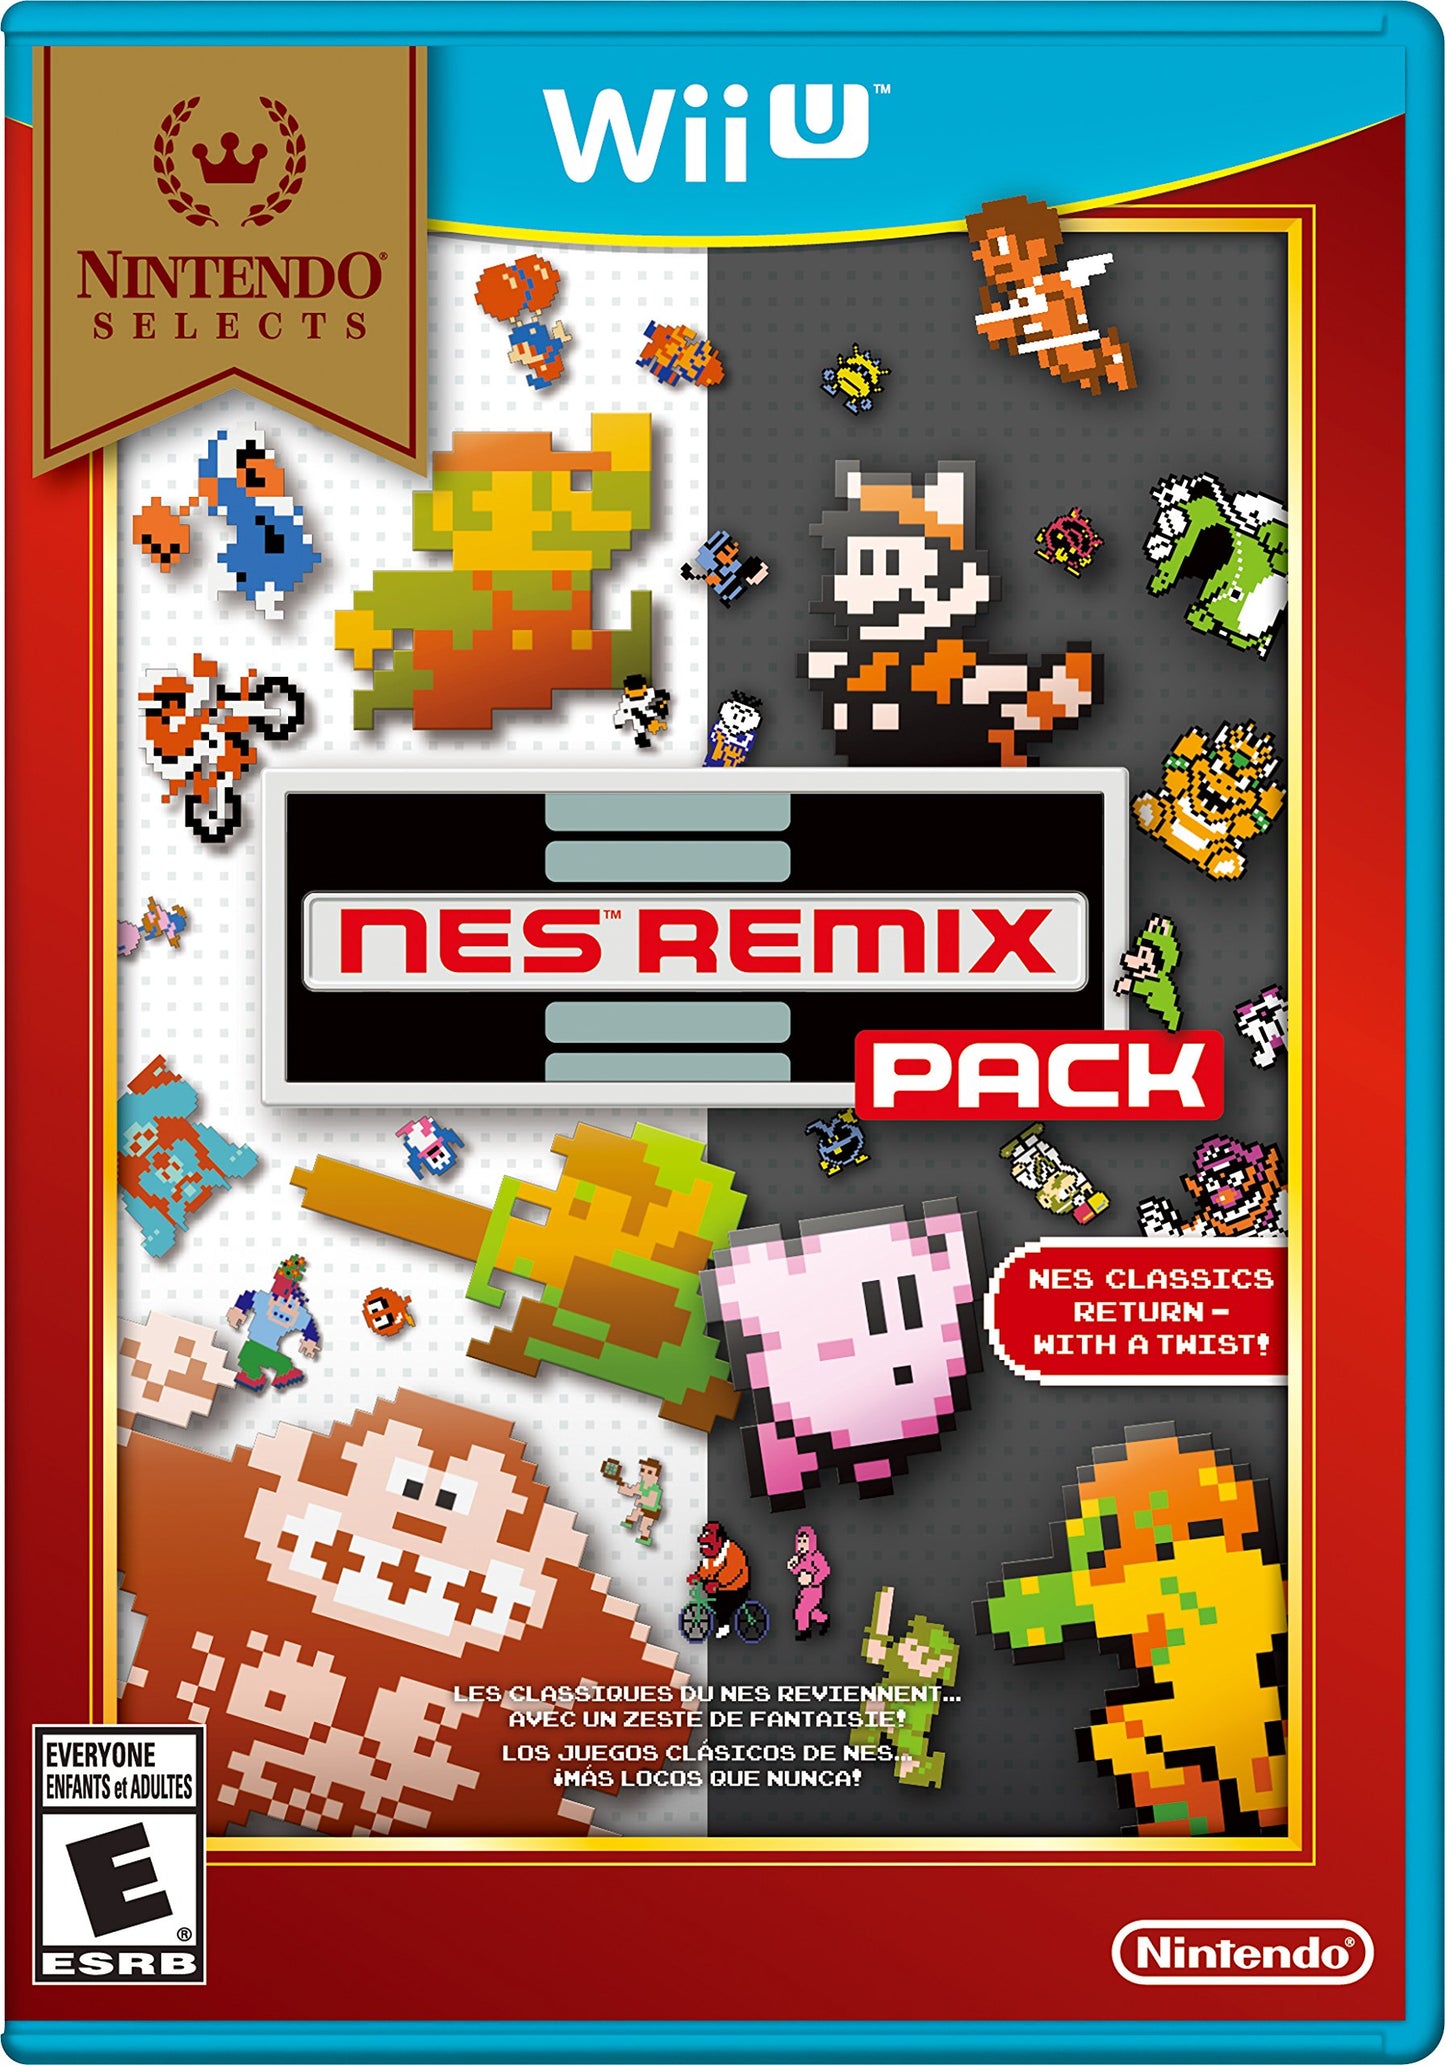 NES Remix Pack (Nintendo Selects) (WiiU)